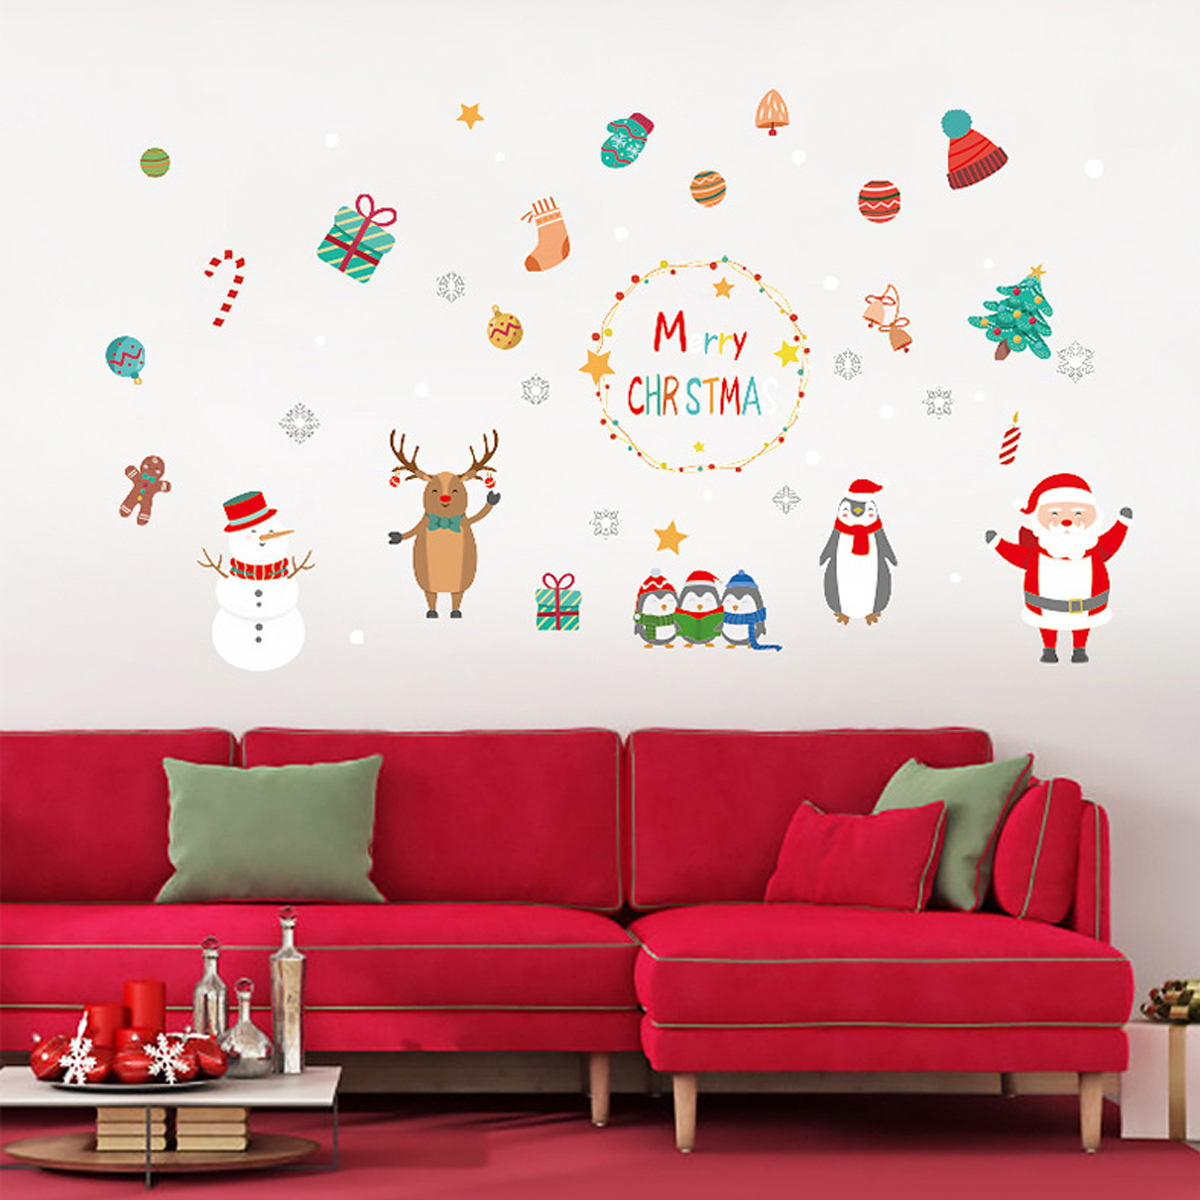 2020-Christmas-Decoration-Sticker-Glass-windows-Decals-Merry-Christmas-Home-Decoration-Wall-Stickers-1764899-8